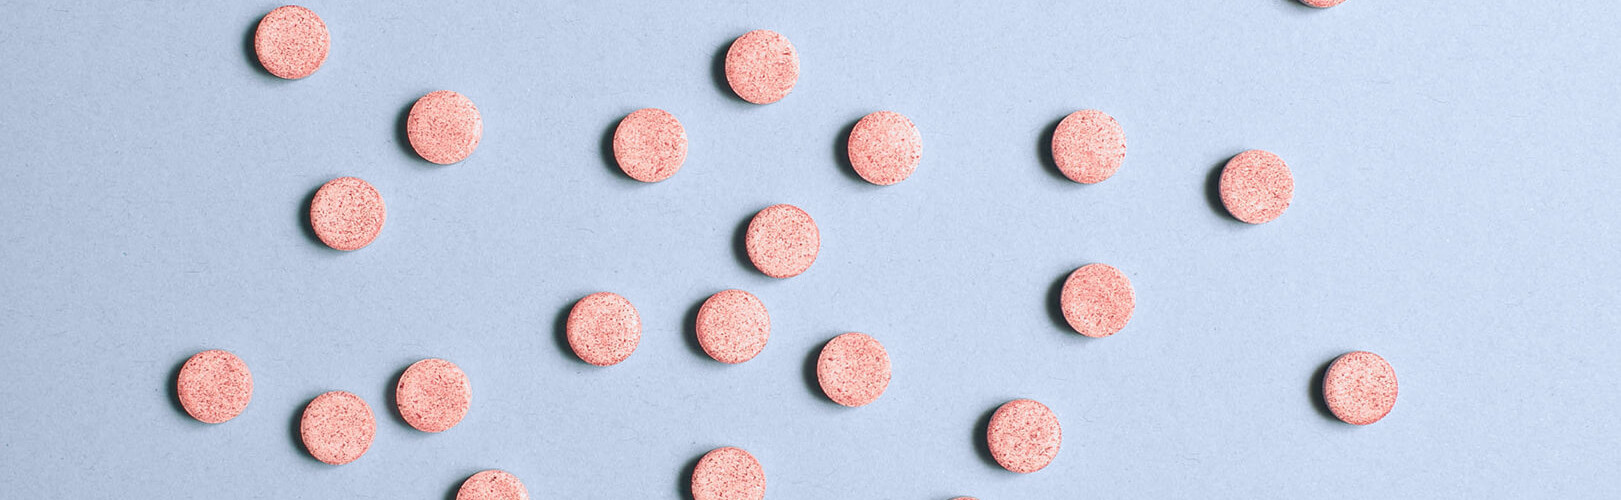 Rondsel Inhalen taal Vitamine B12 injectie of tabletten? | B12.nl